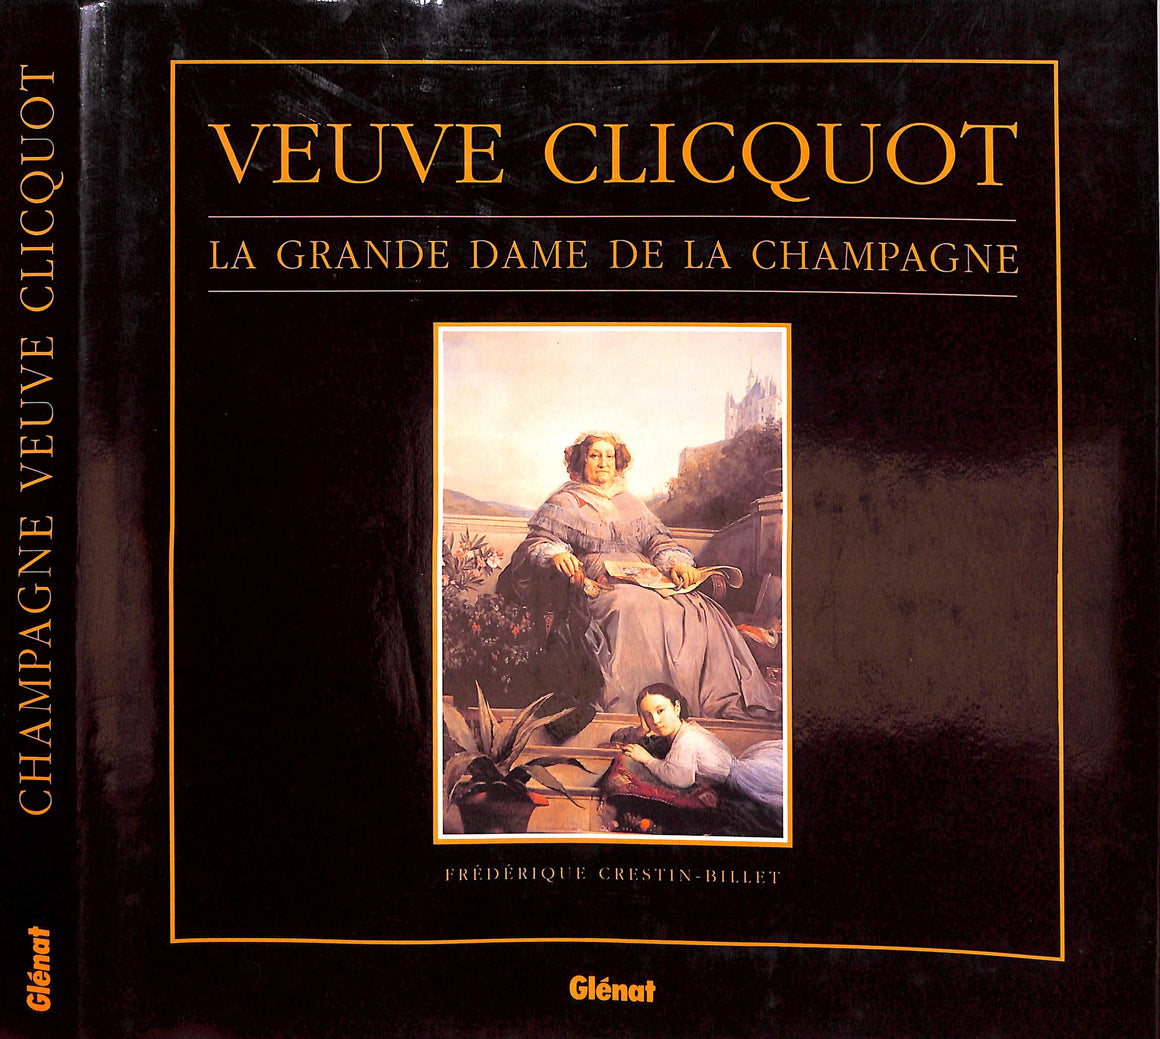 "Veuve Clicquot: La Grande Dame De La Champagne" 1992 CRESTIN-BILLET, Frederique